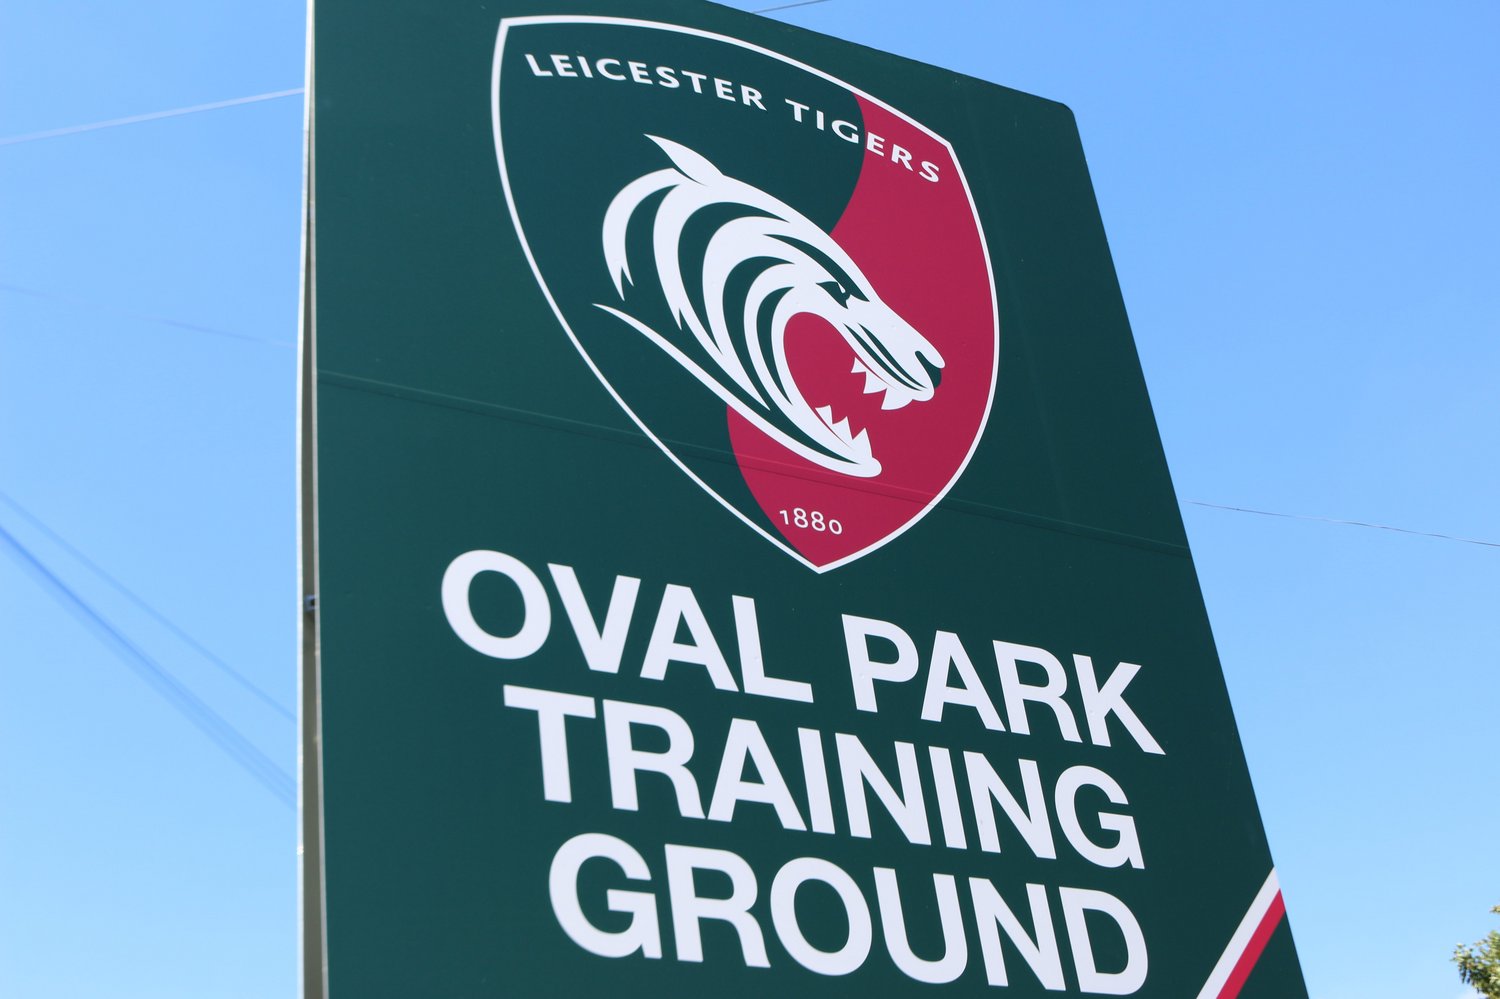 Oval Park Training Ground